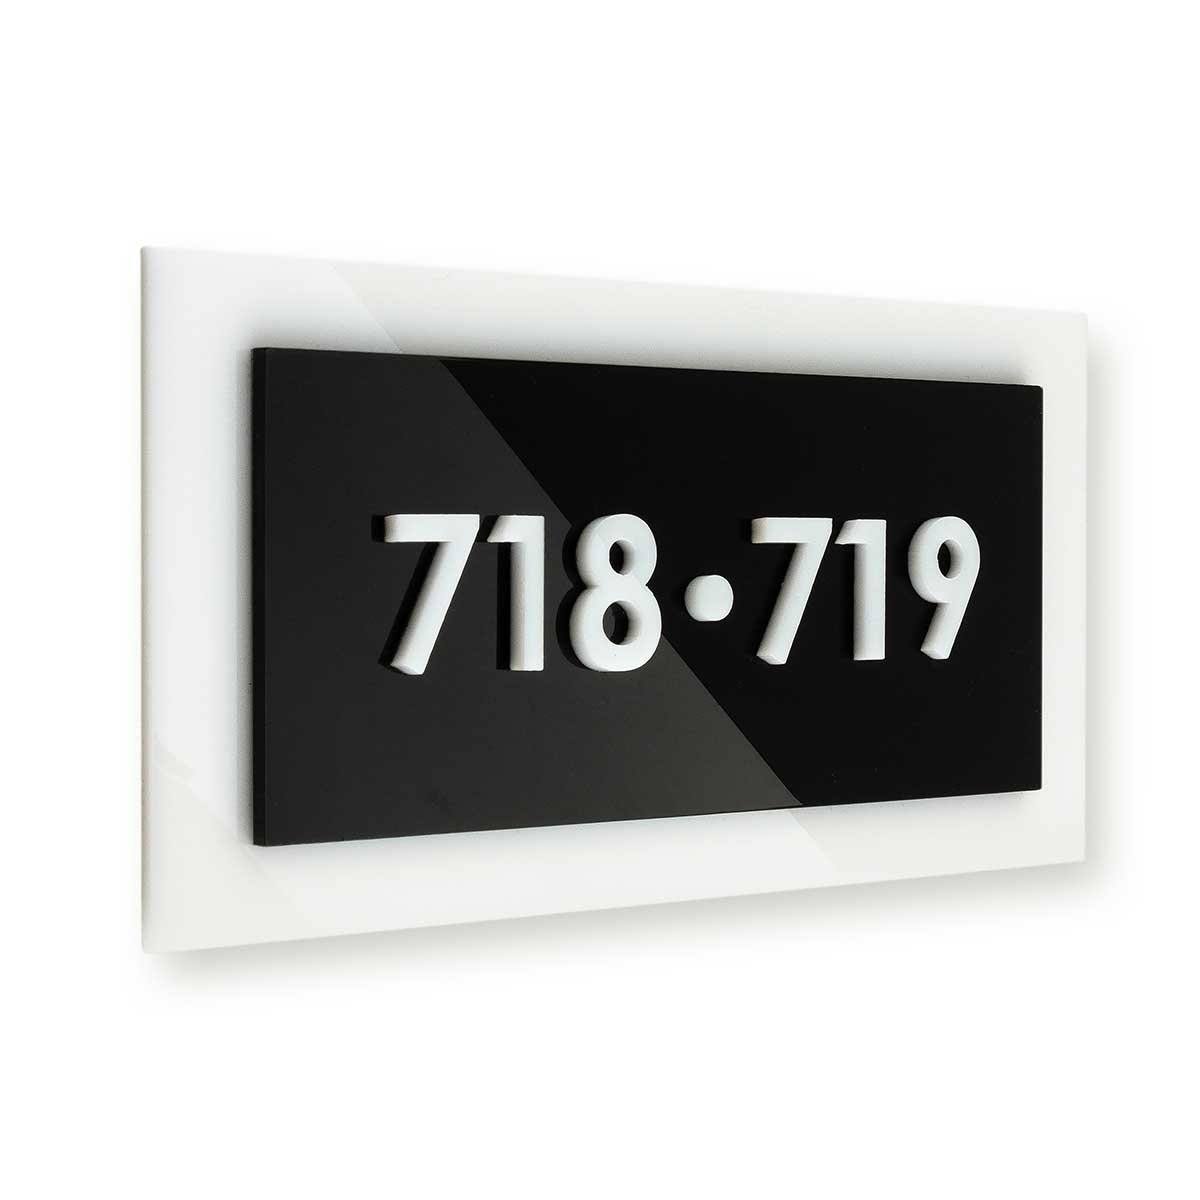 Door Signs - Counselor Sign - Acrylic Door Plate "Simple" Design